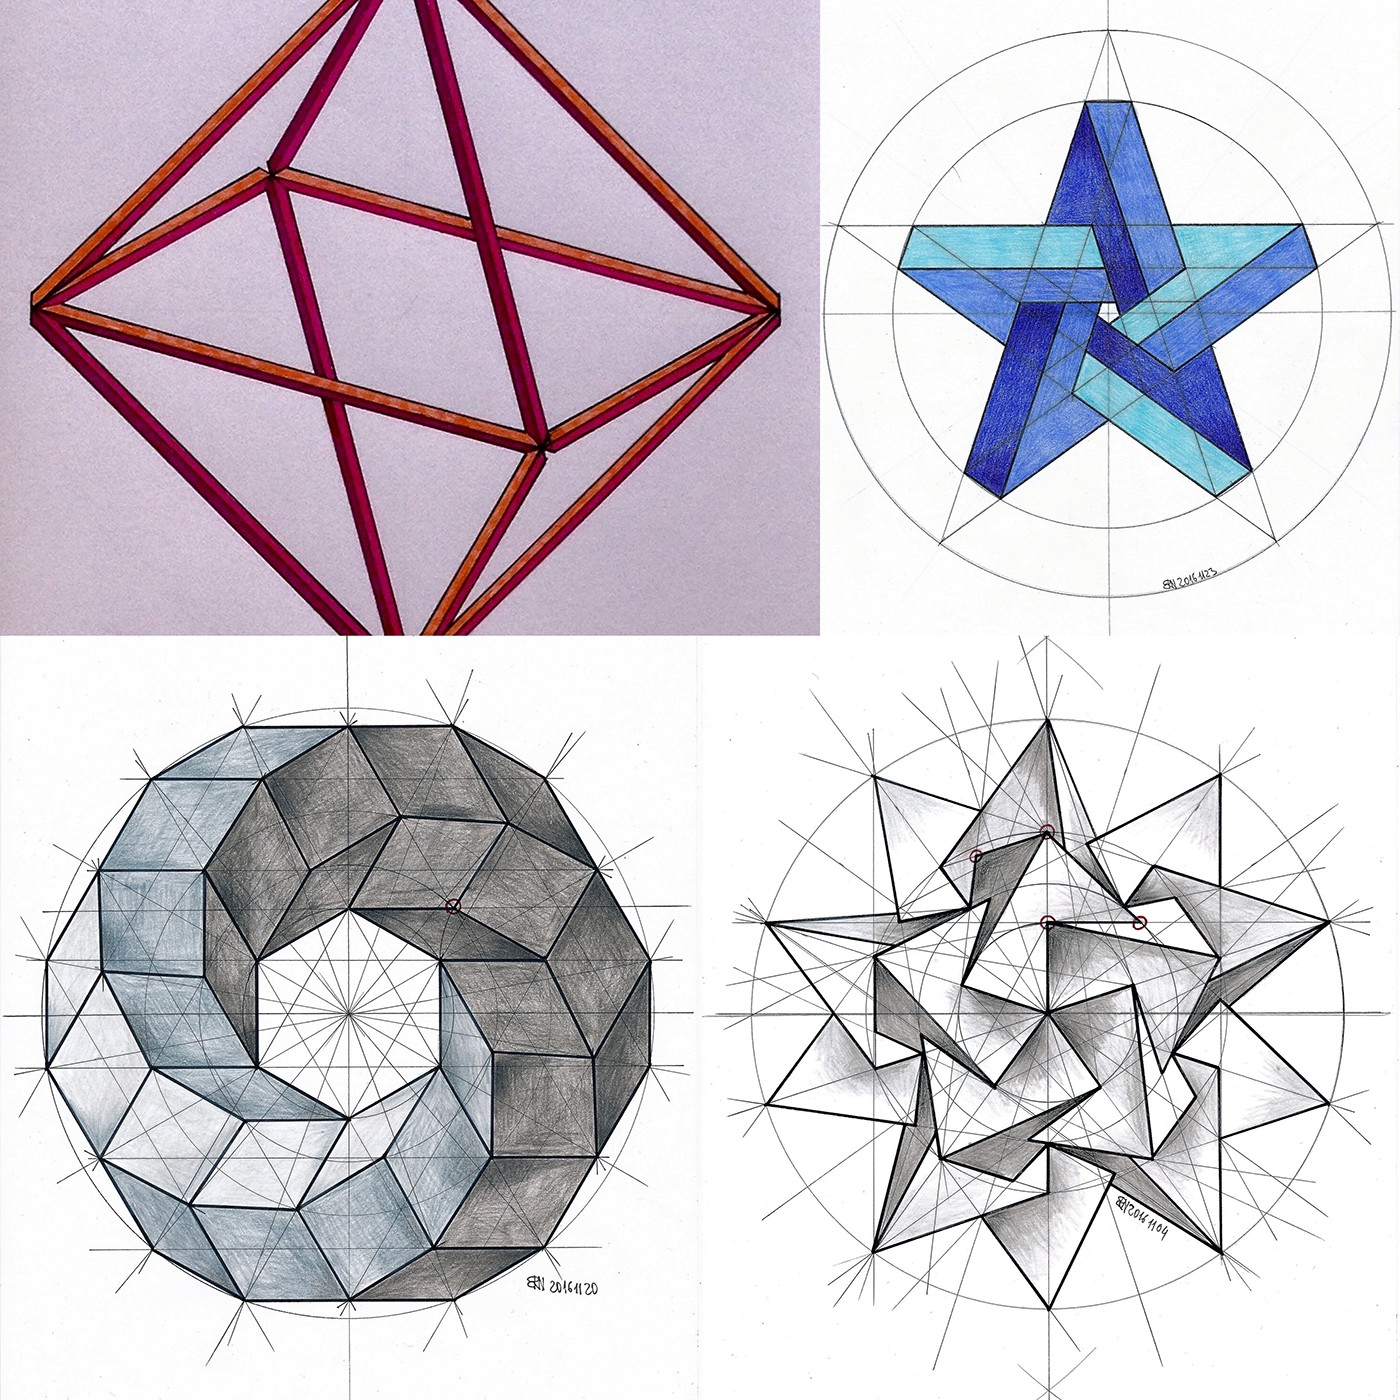 #string #geometry #symmetry #collage #mathart #regolo54 #light #rainbow #triangle #art